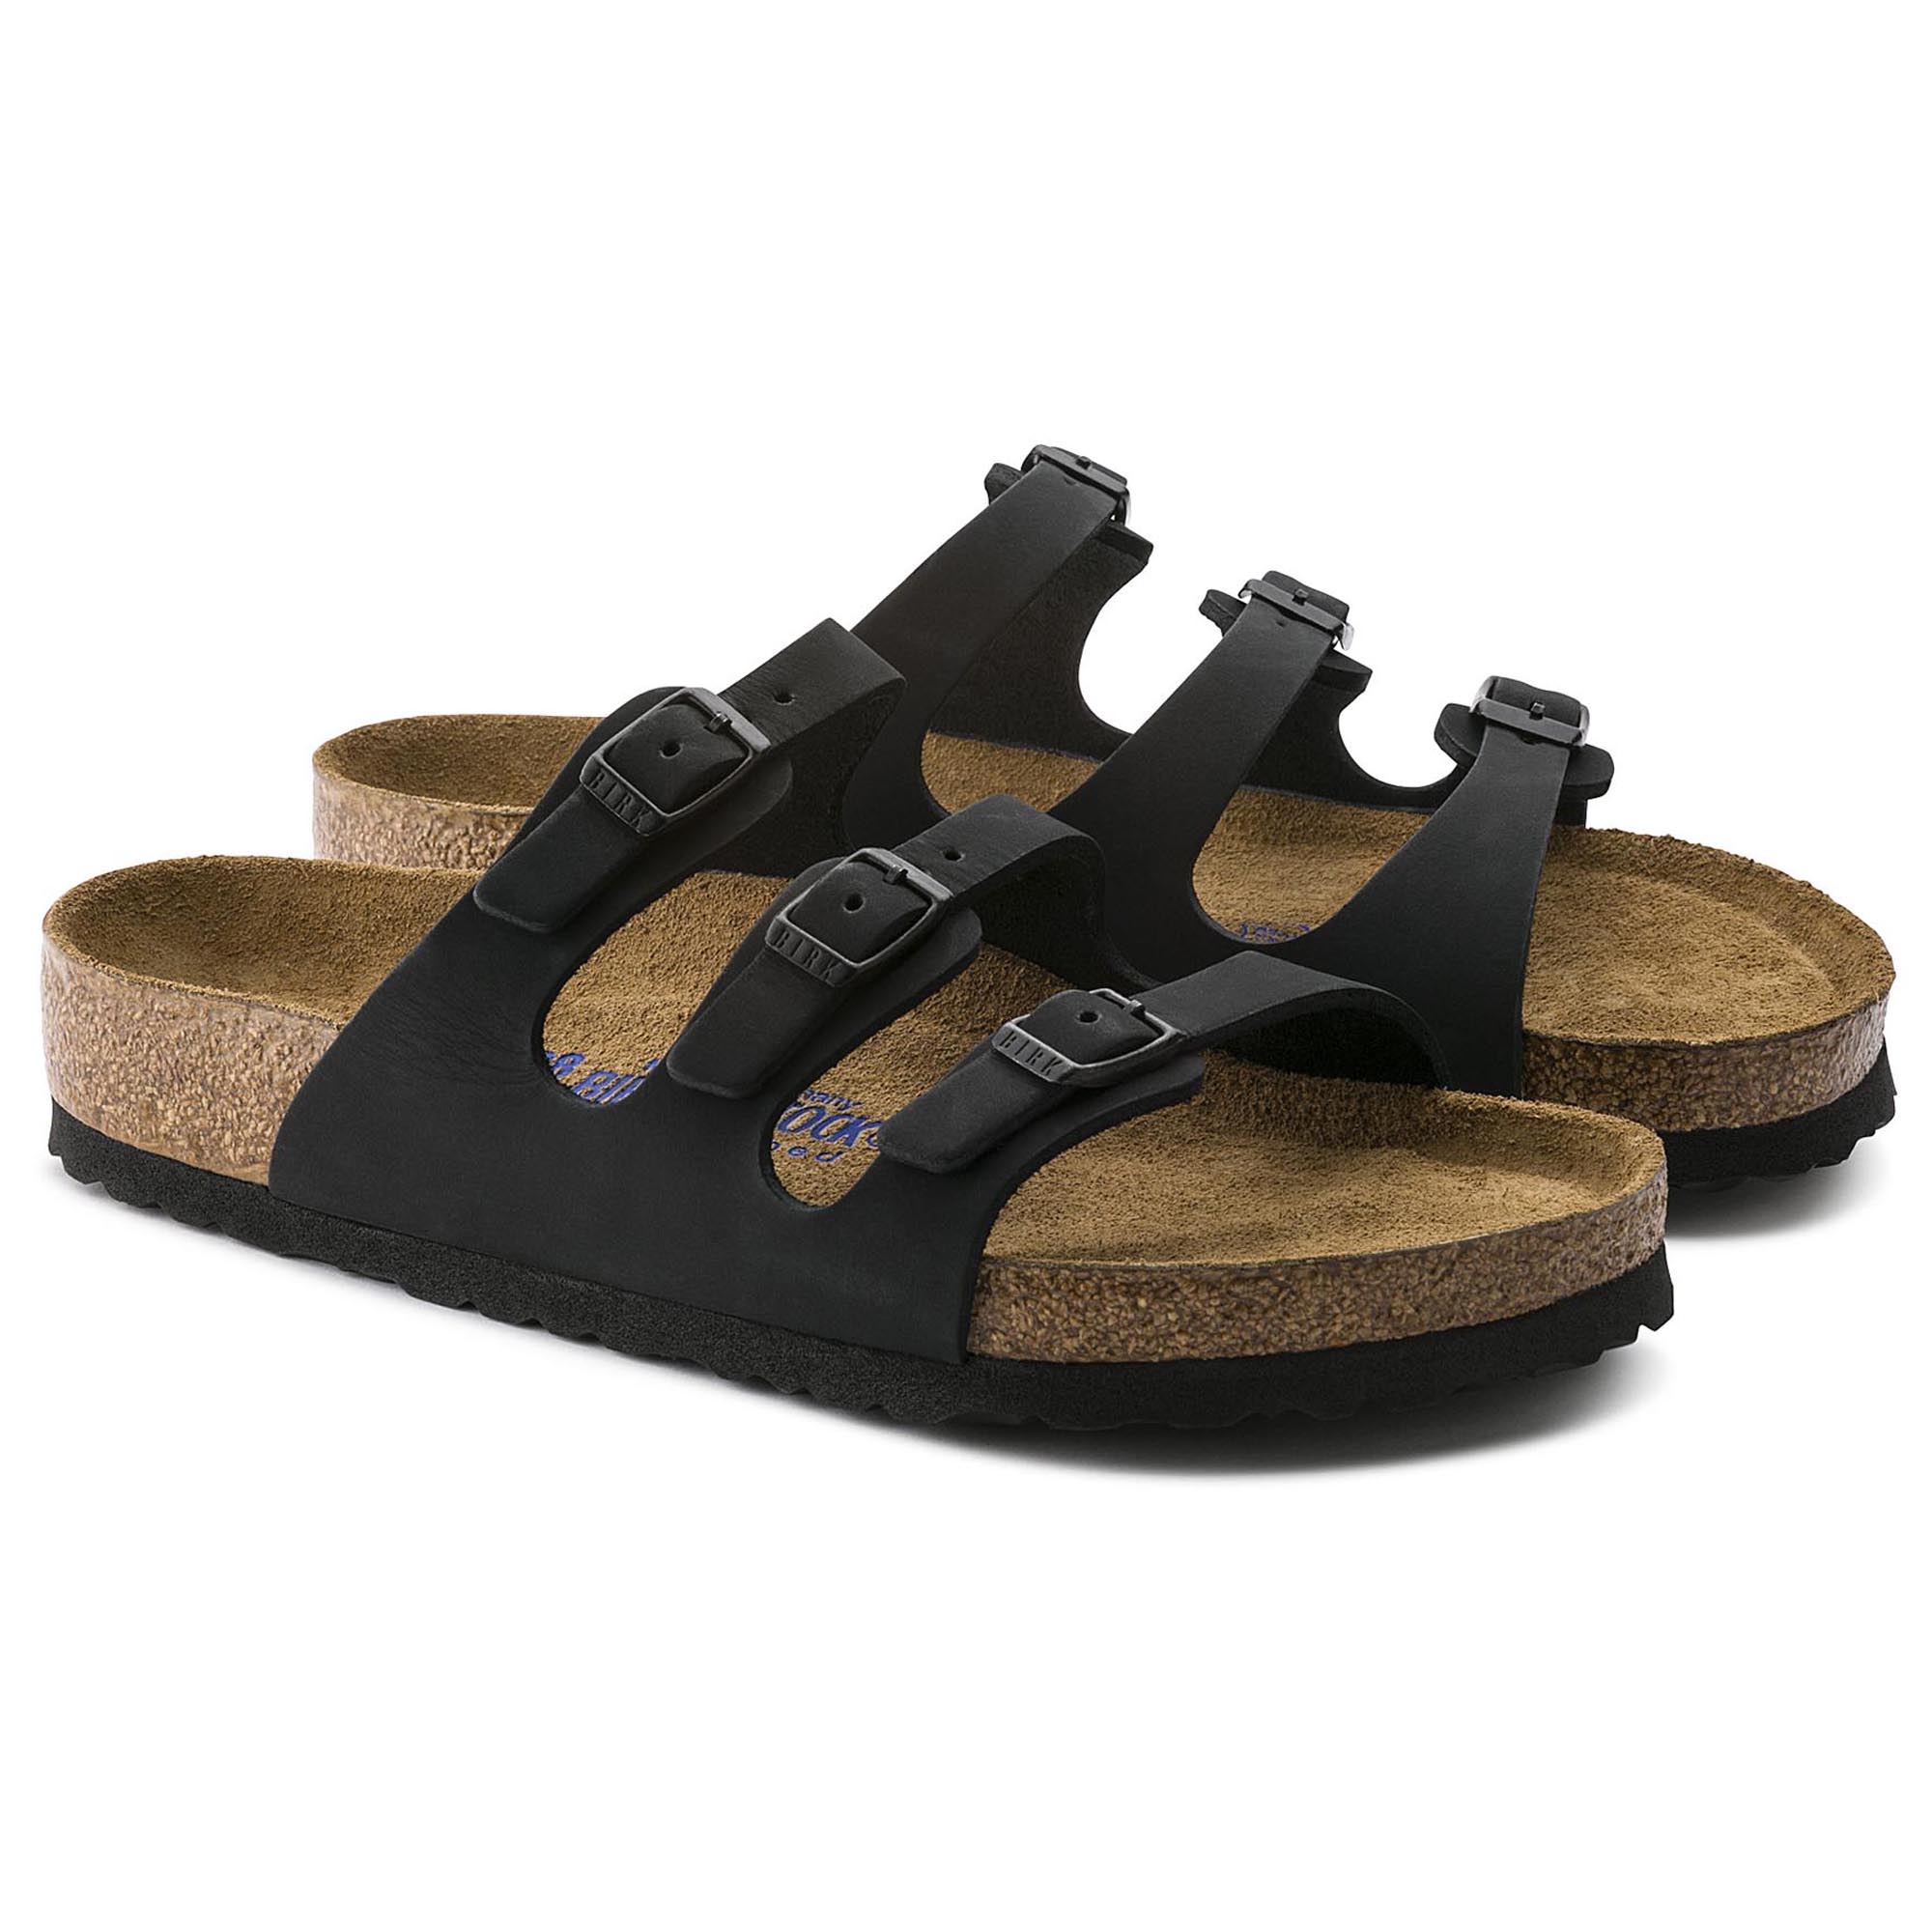 3 strap birkenstock sandals